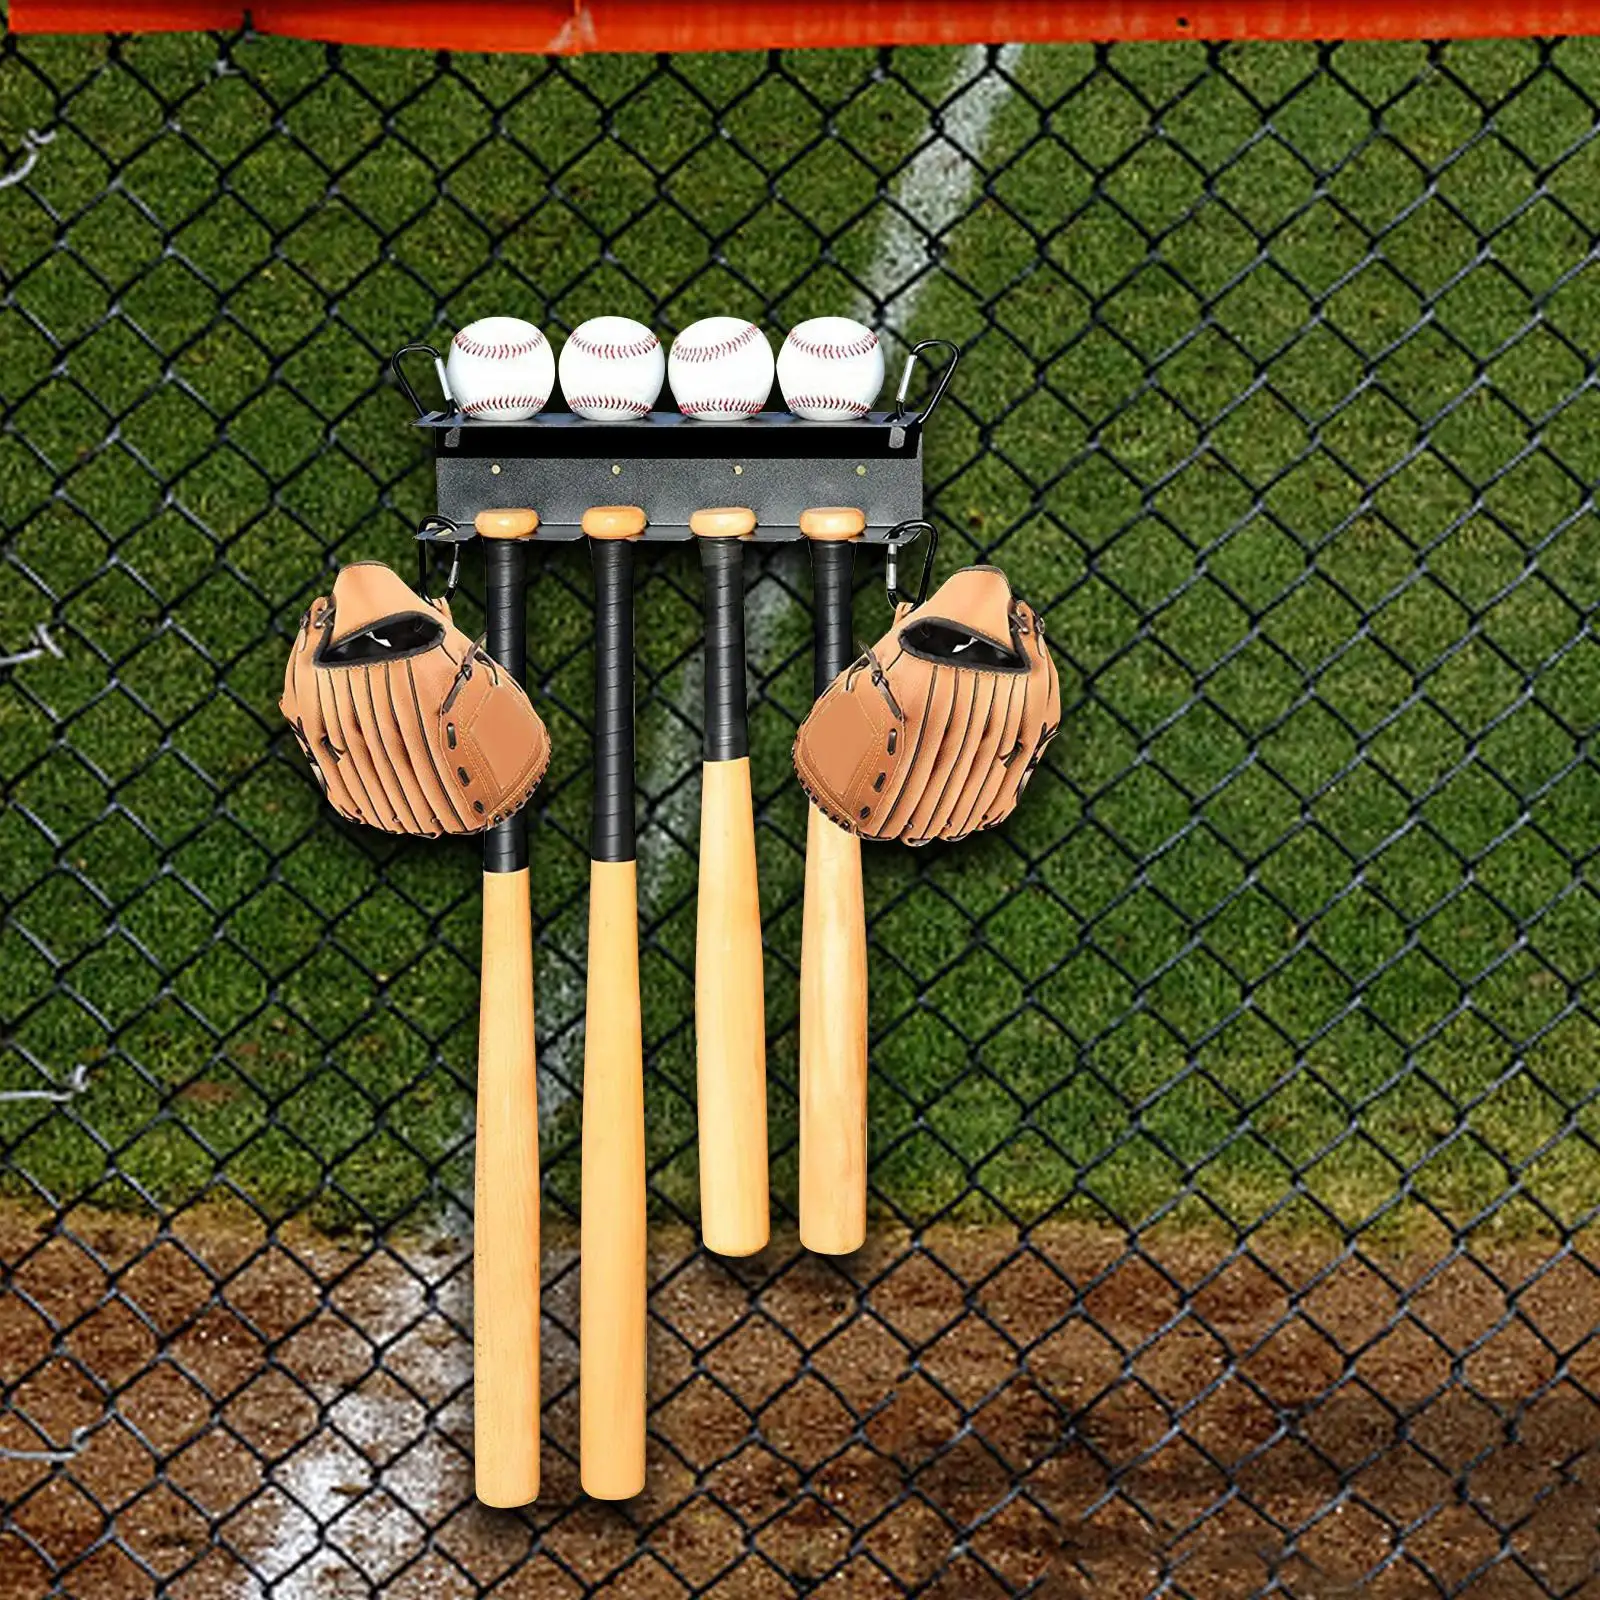 Baseball Bats Shelf Ball Rack sports Organizer Hold 4 Bats 4 Balls Iron Hanging Display Hanger for Indoor Sports Home